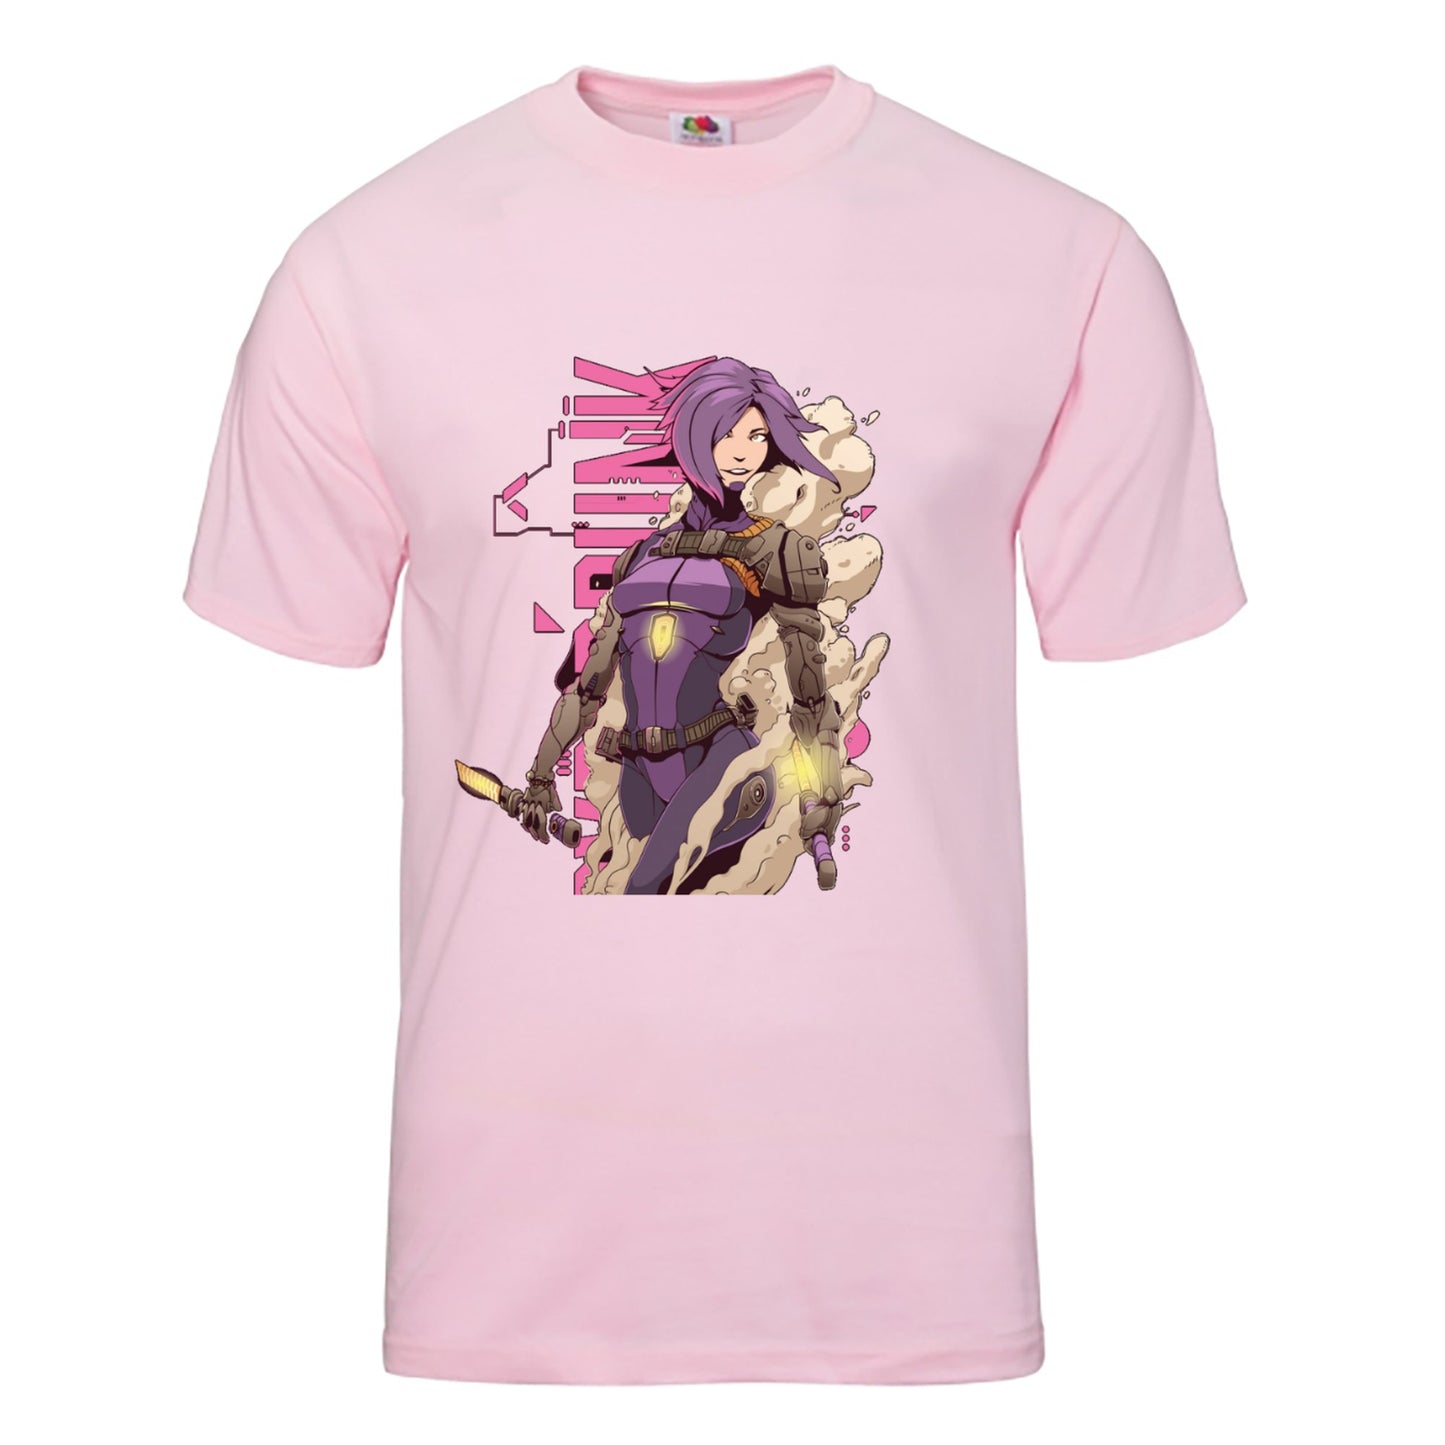 Cyberpunk Warrior Queen Tee Shirt - Hypno Monkey